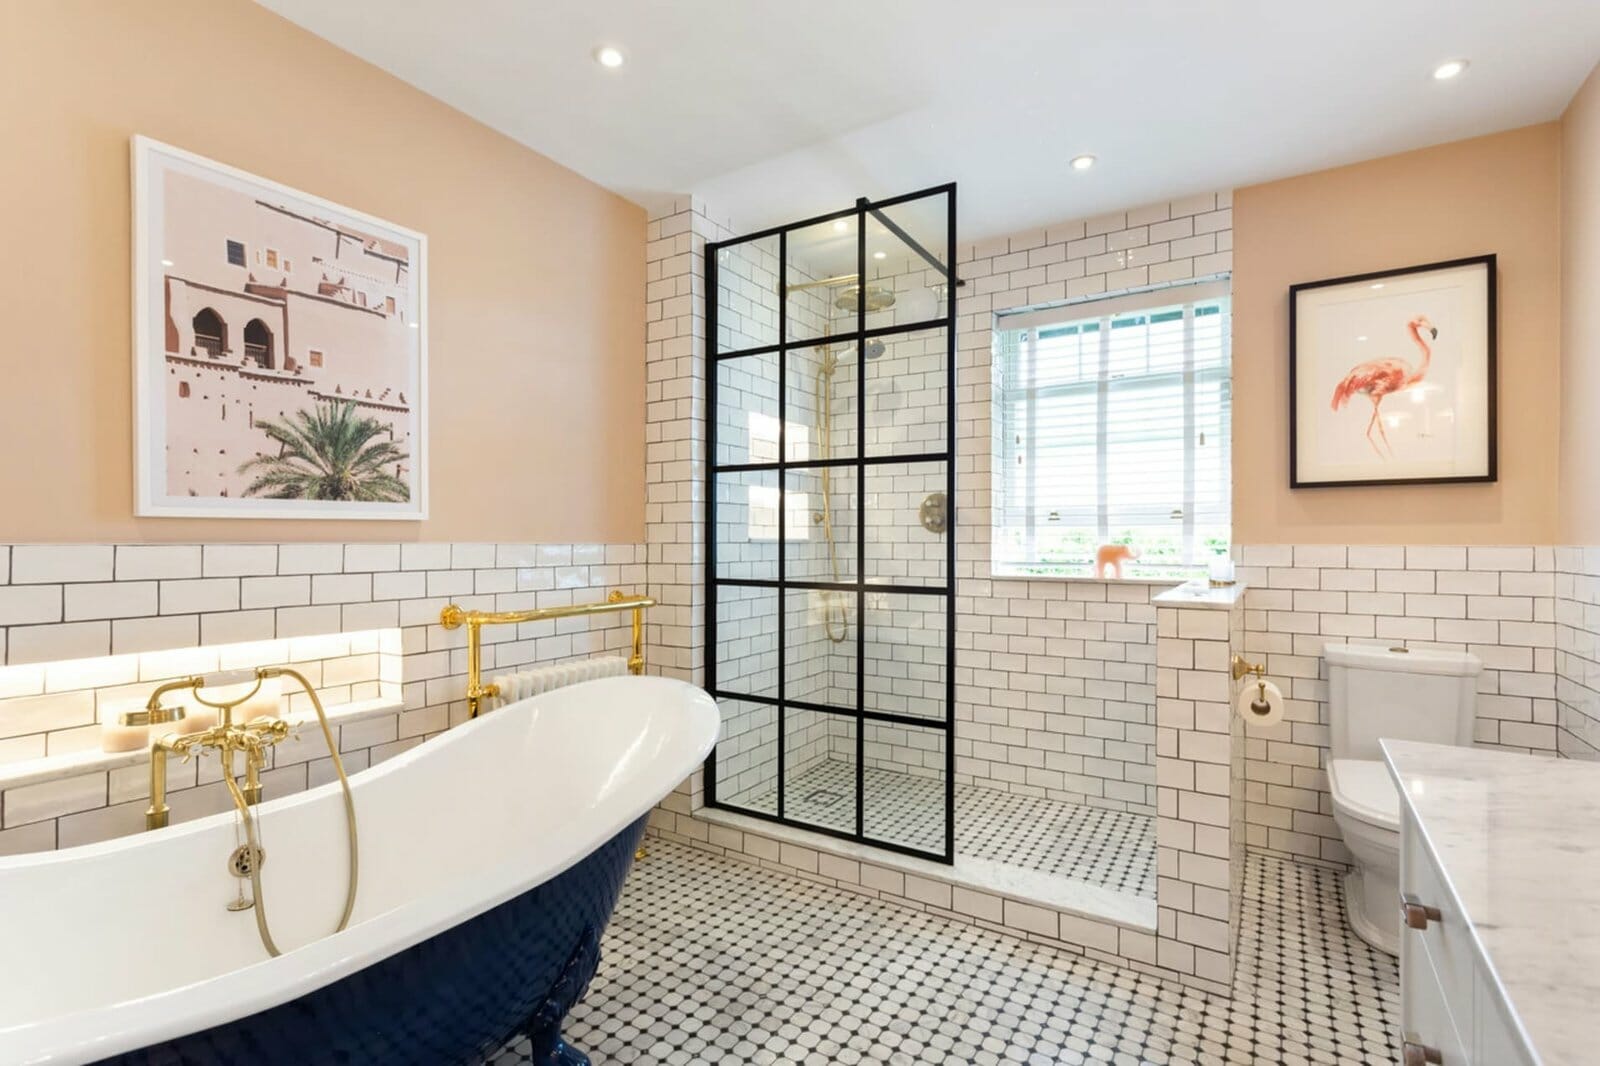 Bathroom tile ideas with a vintage vibe